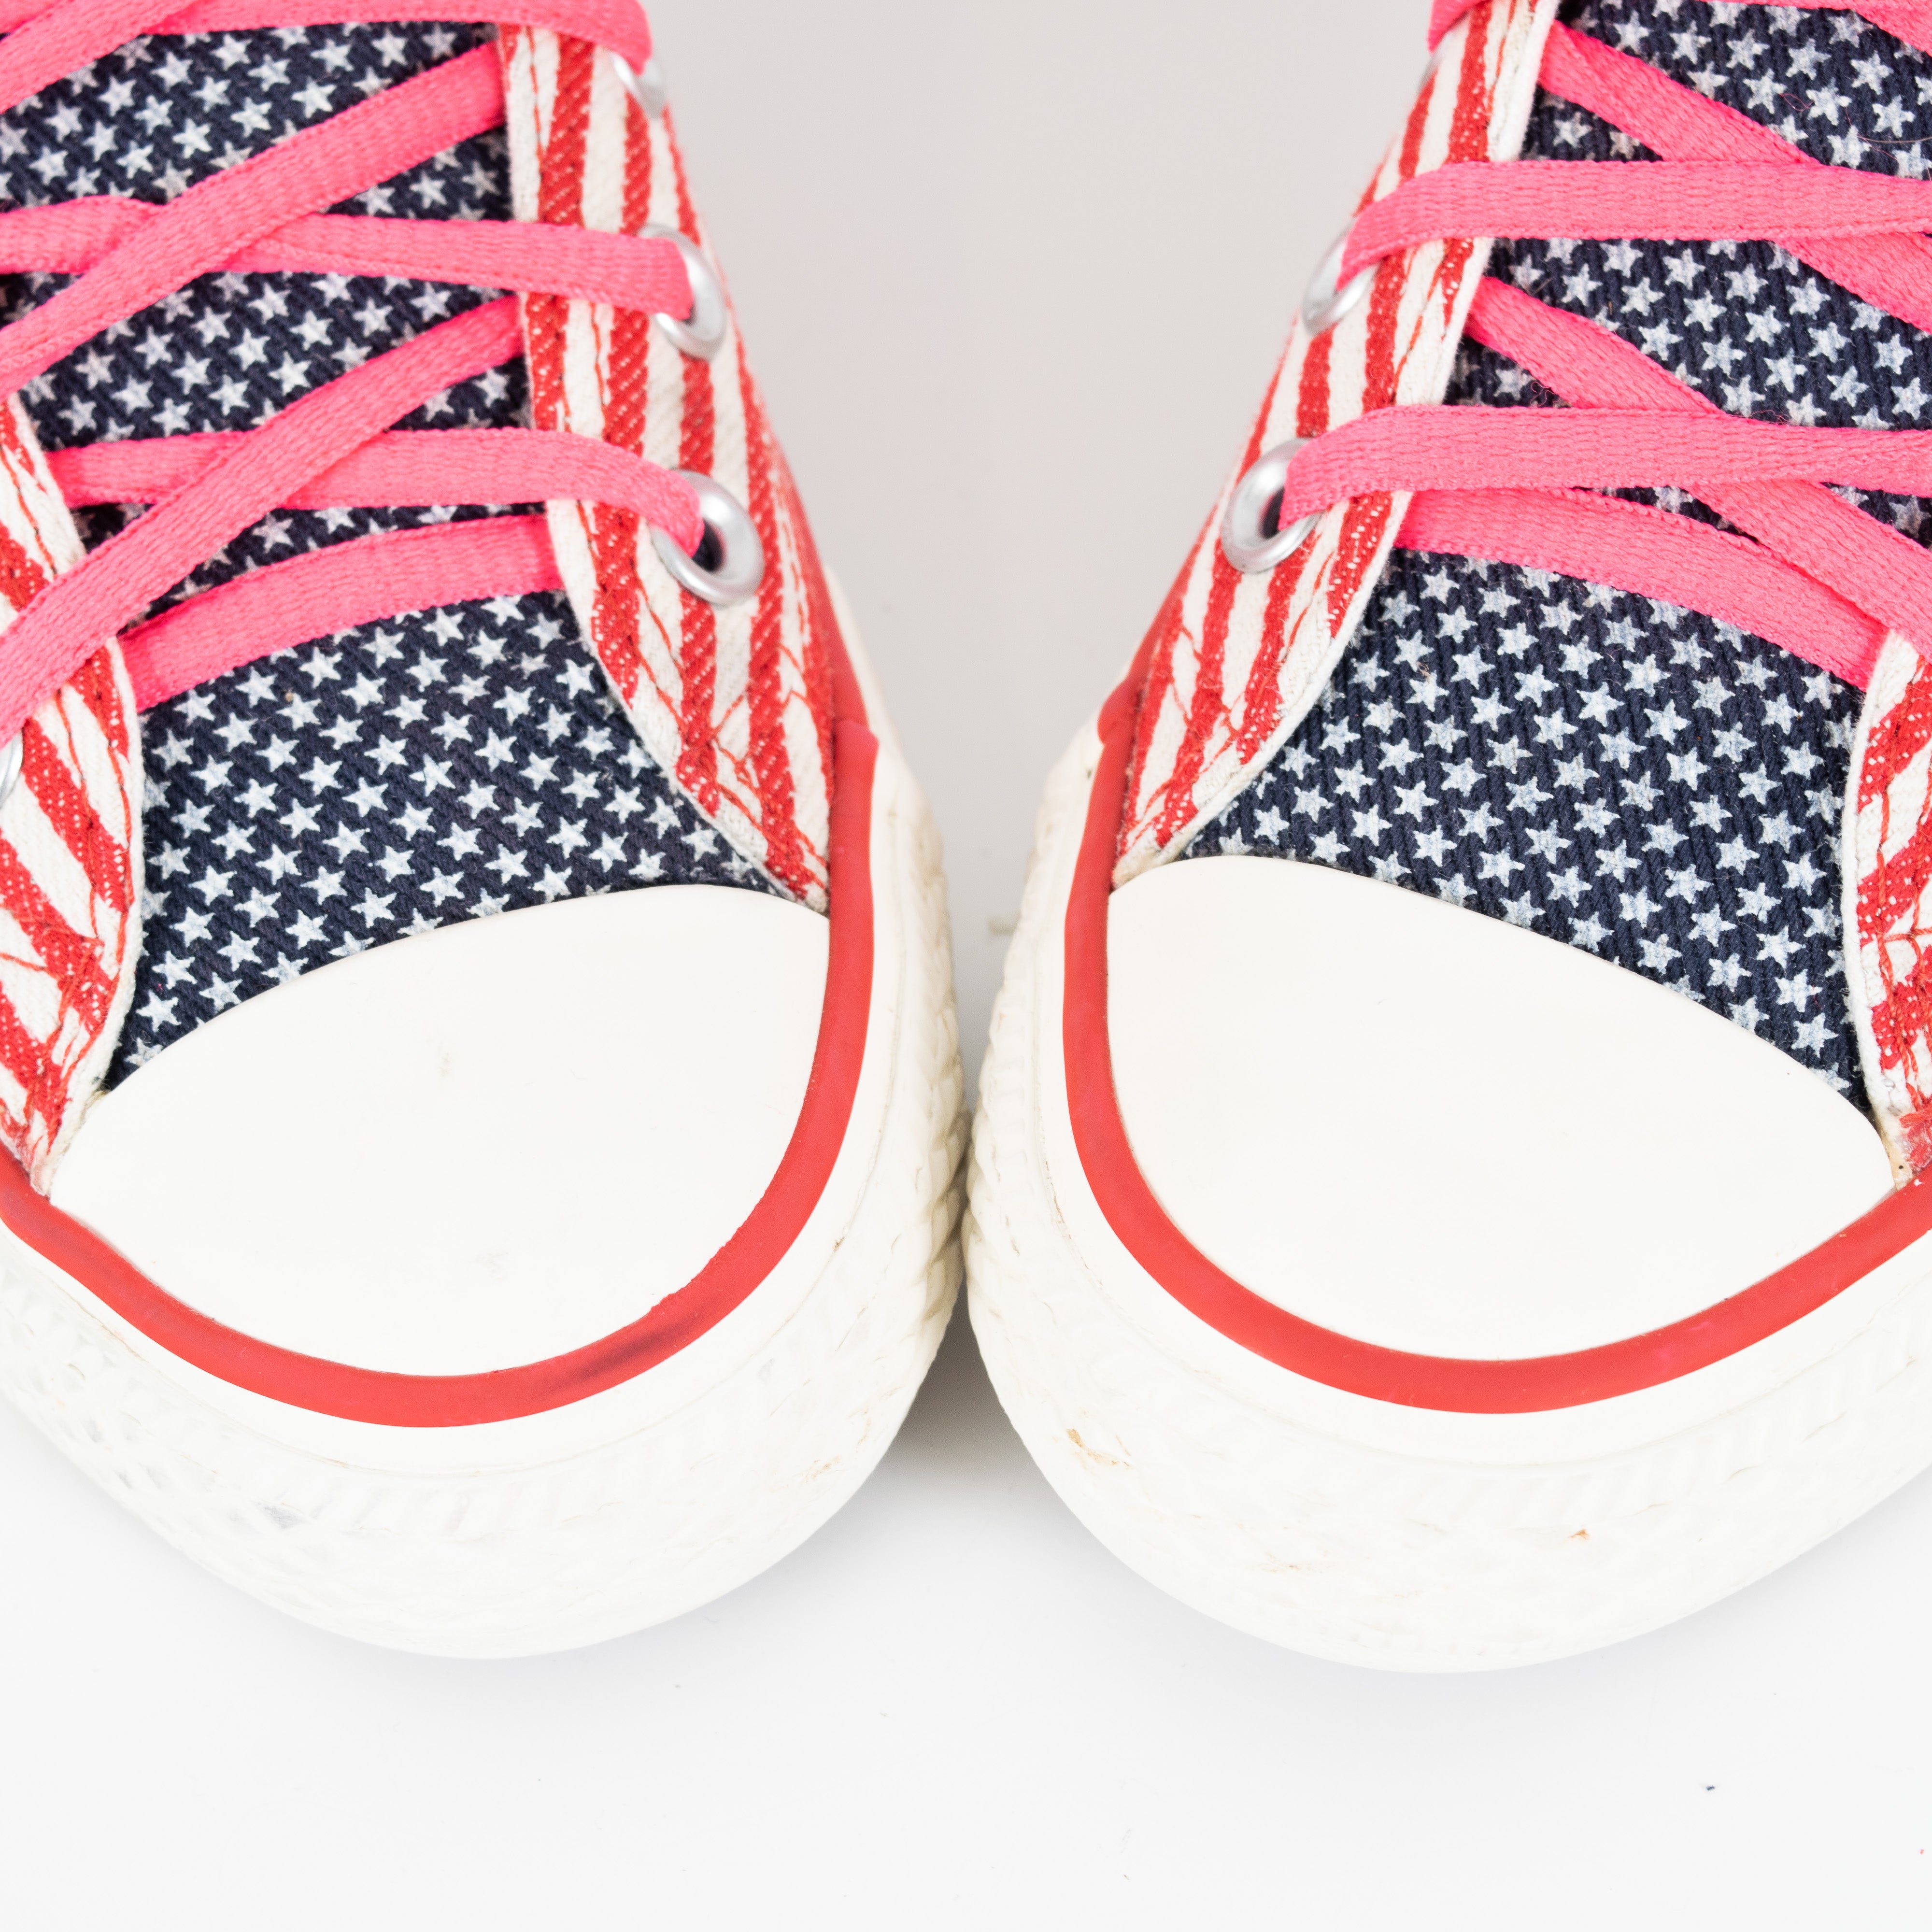 Converse Chuck Taylor All Star American Flag Striped Sneakers Women's EU36